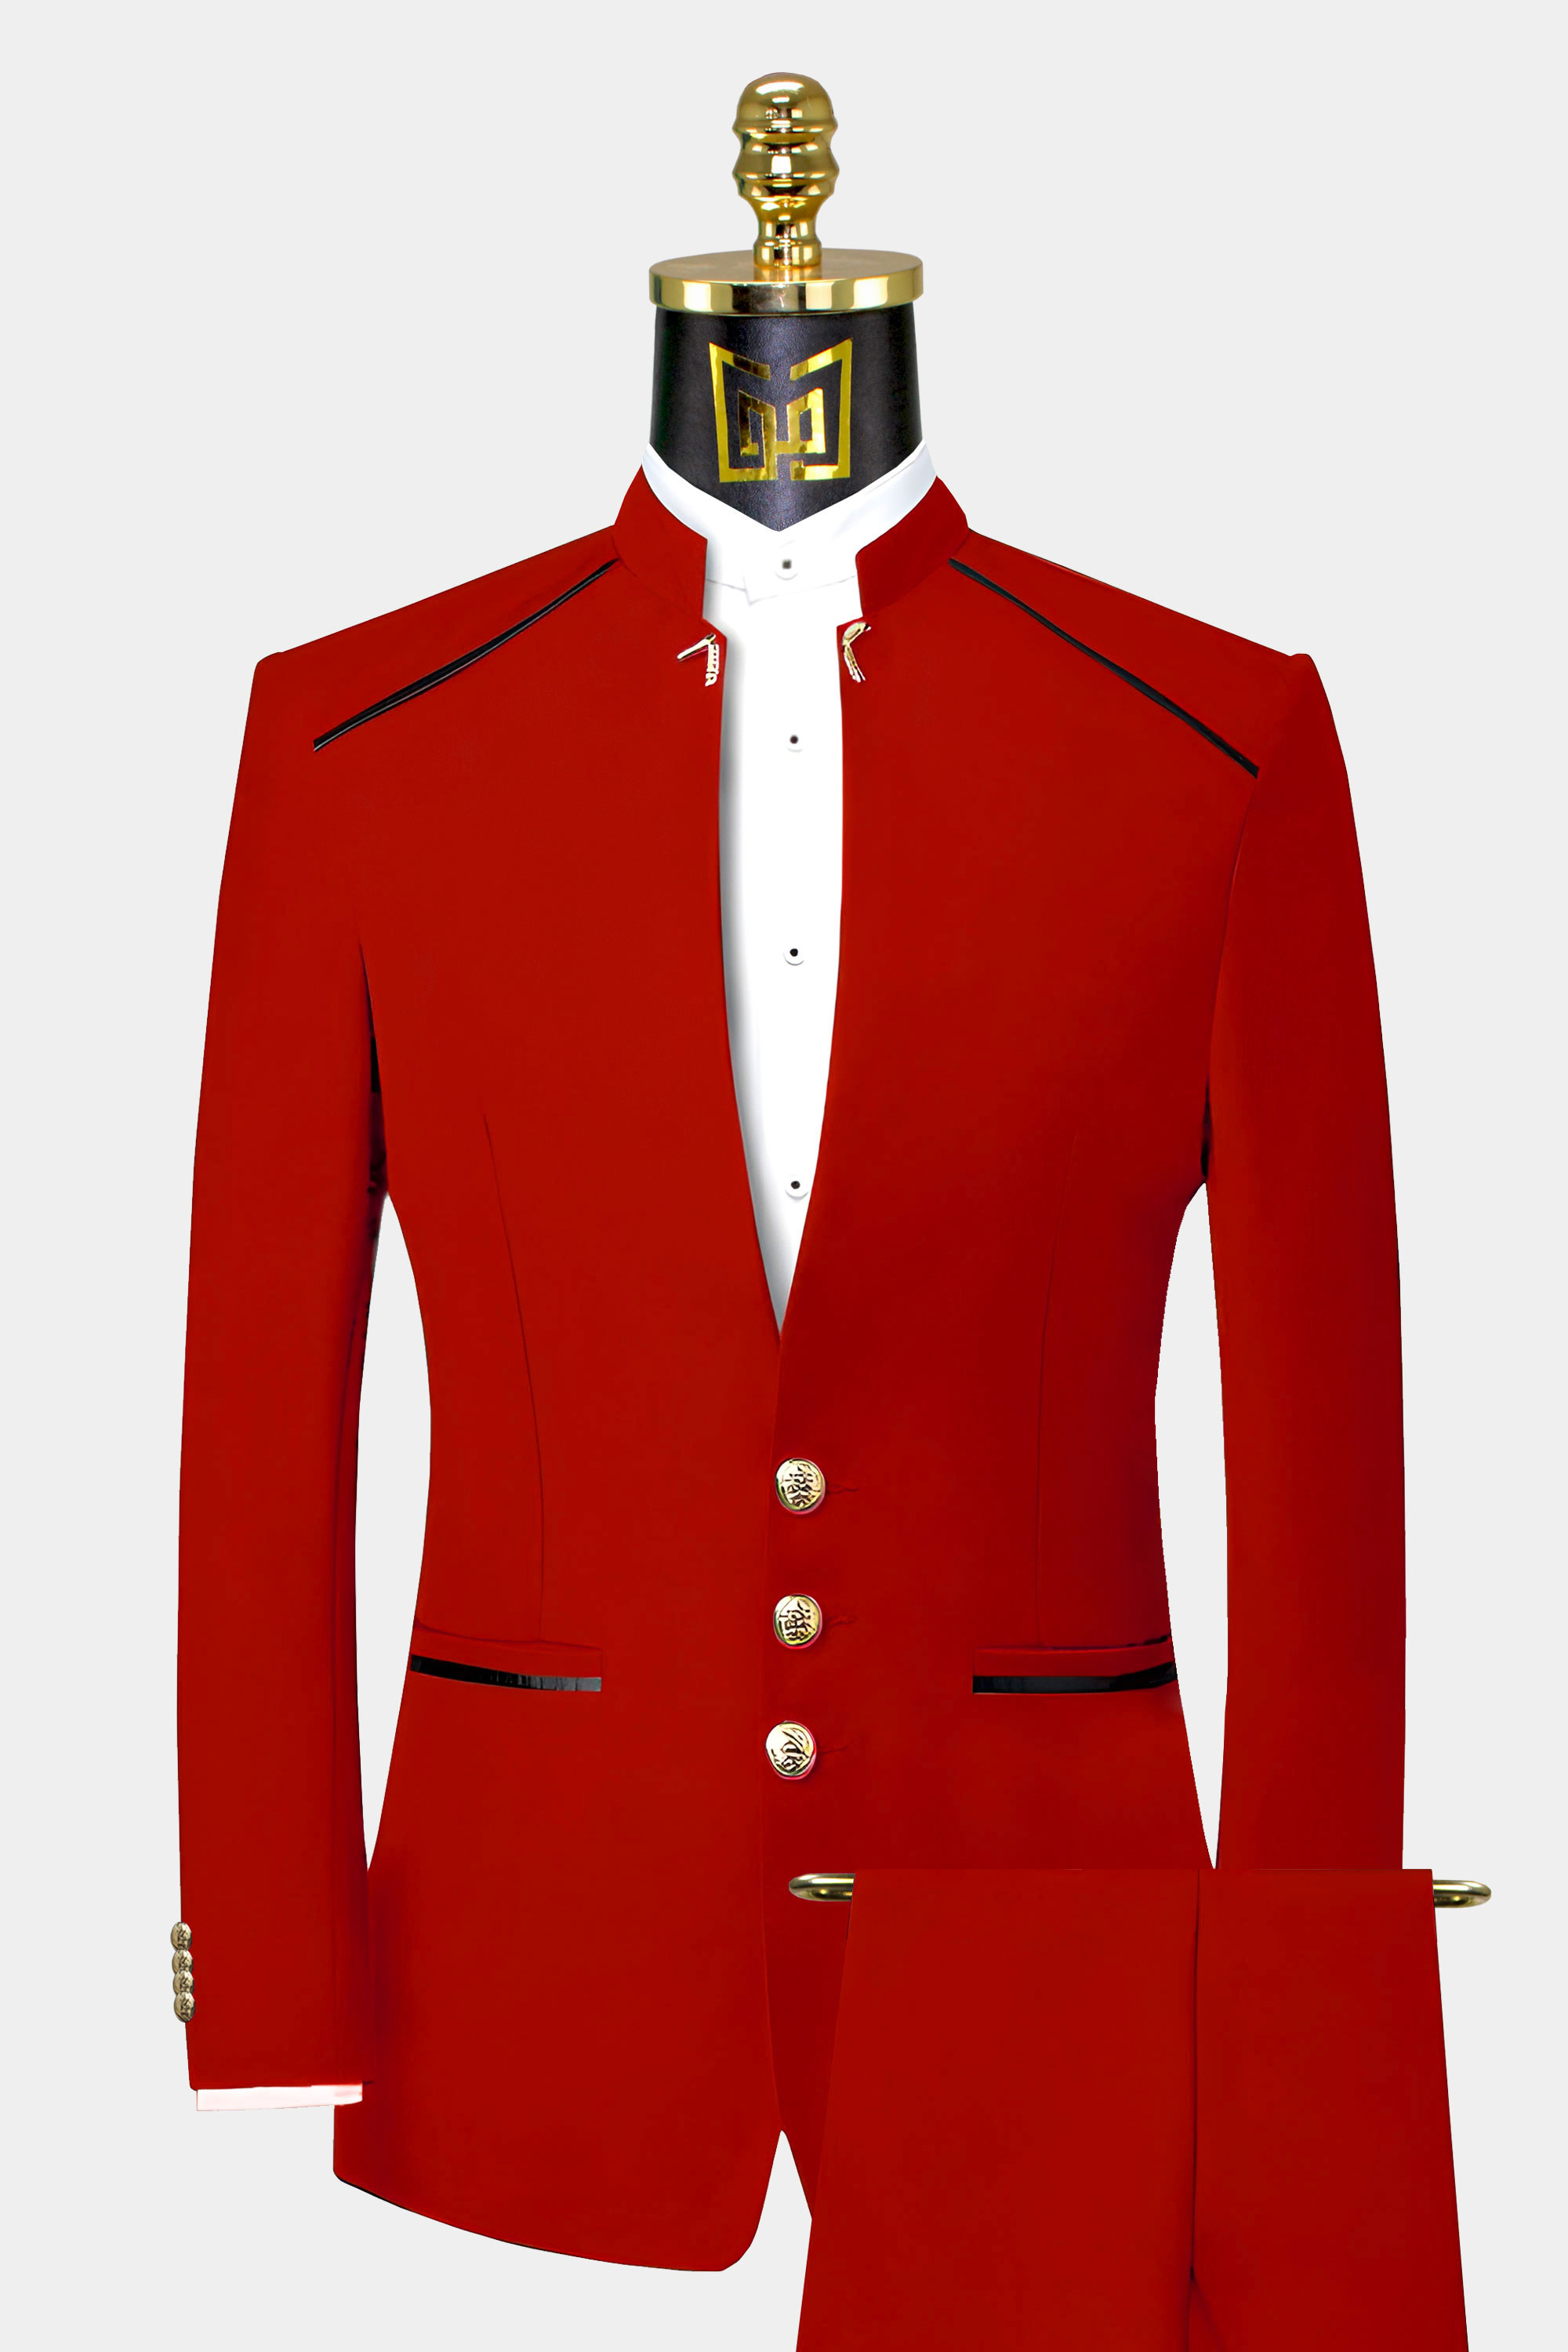 Mens-Red-Mandarin-Collar-Suit-Turtle-Nevk-Prom-Wedding-Groom-Suit-from-Gentlemansguru.com